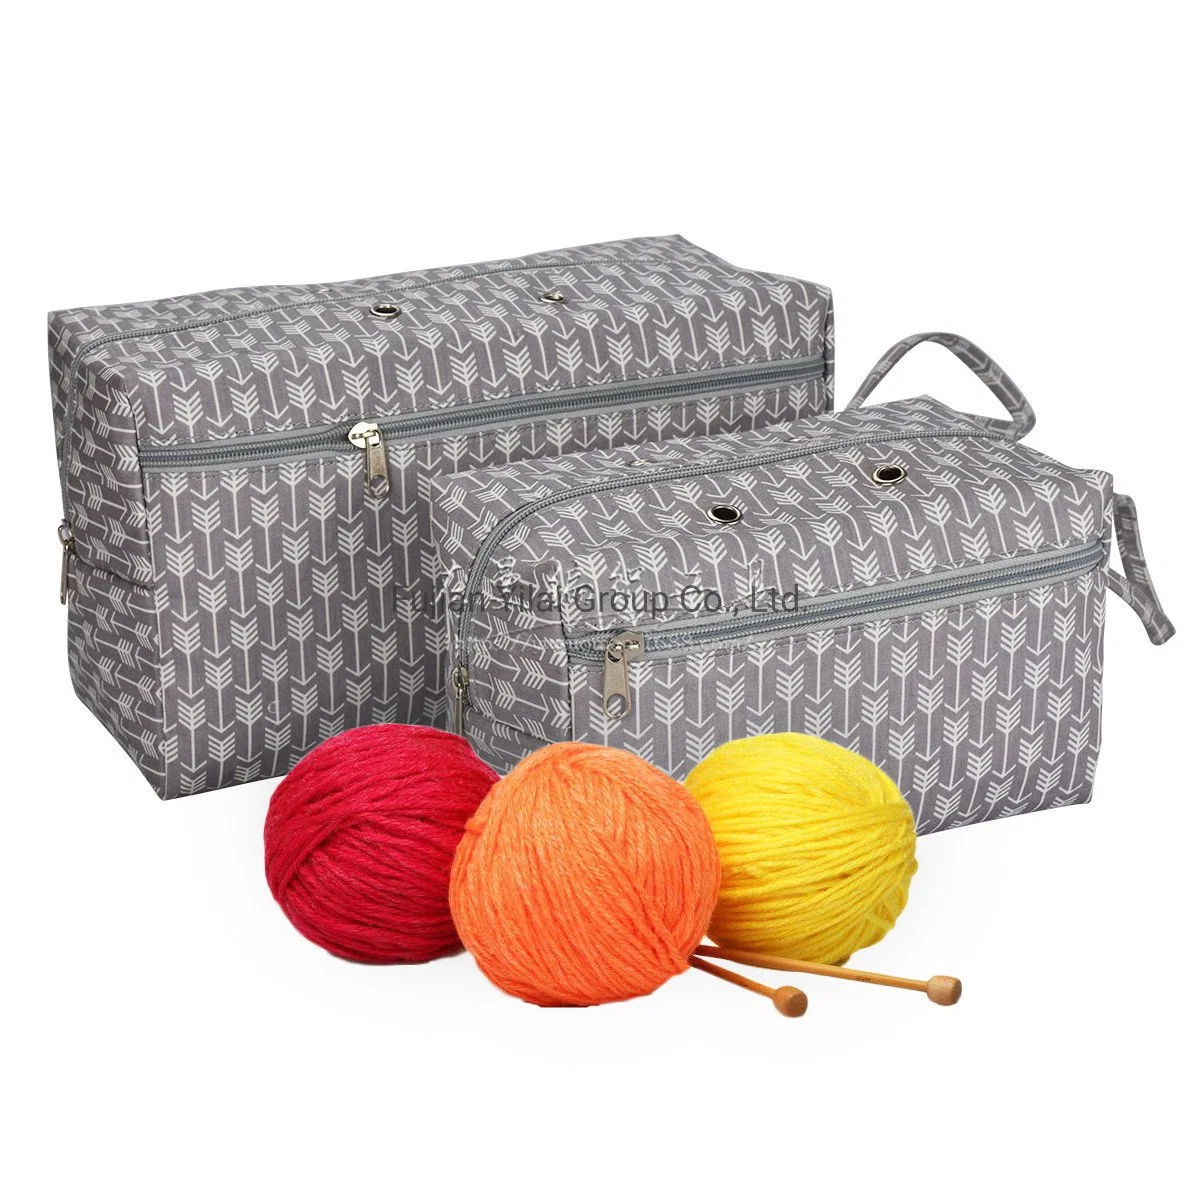 Yarn Storage Bag Skeins Bag Crochet Hooks Project Organizers Wool Ball Holder Tool Case Carrying Yarn Needle Knitting Cloth 150g